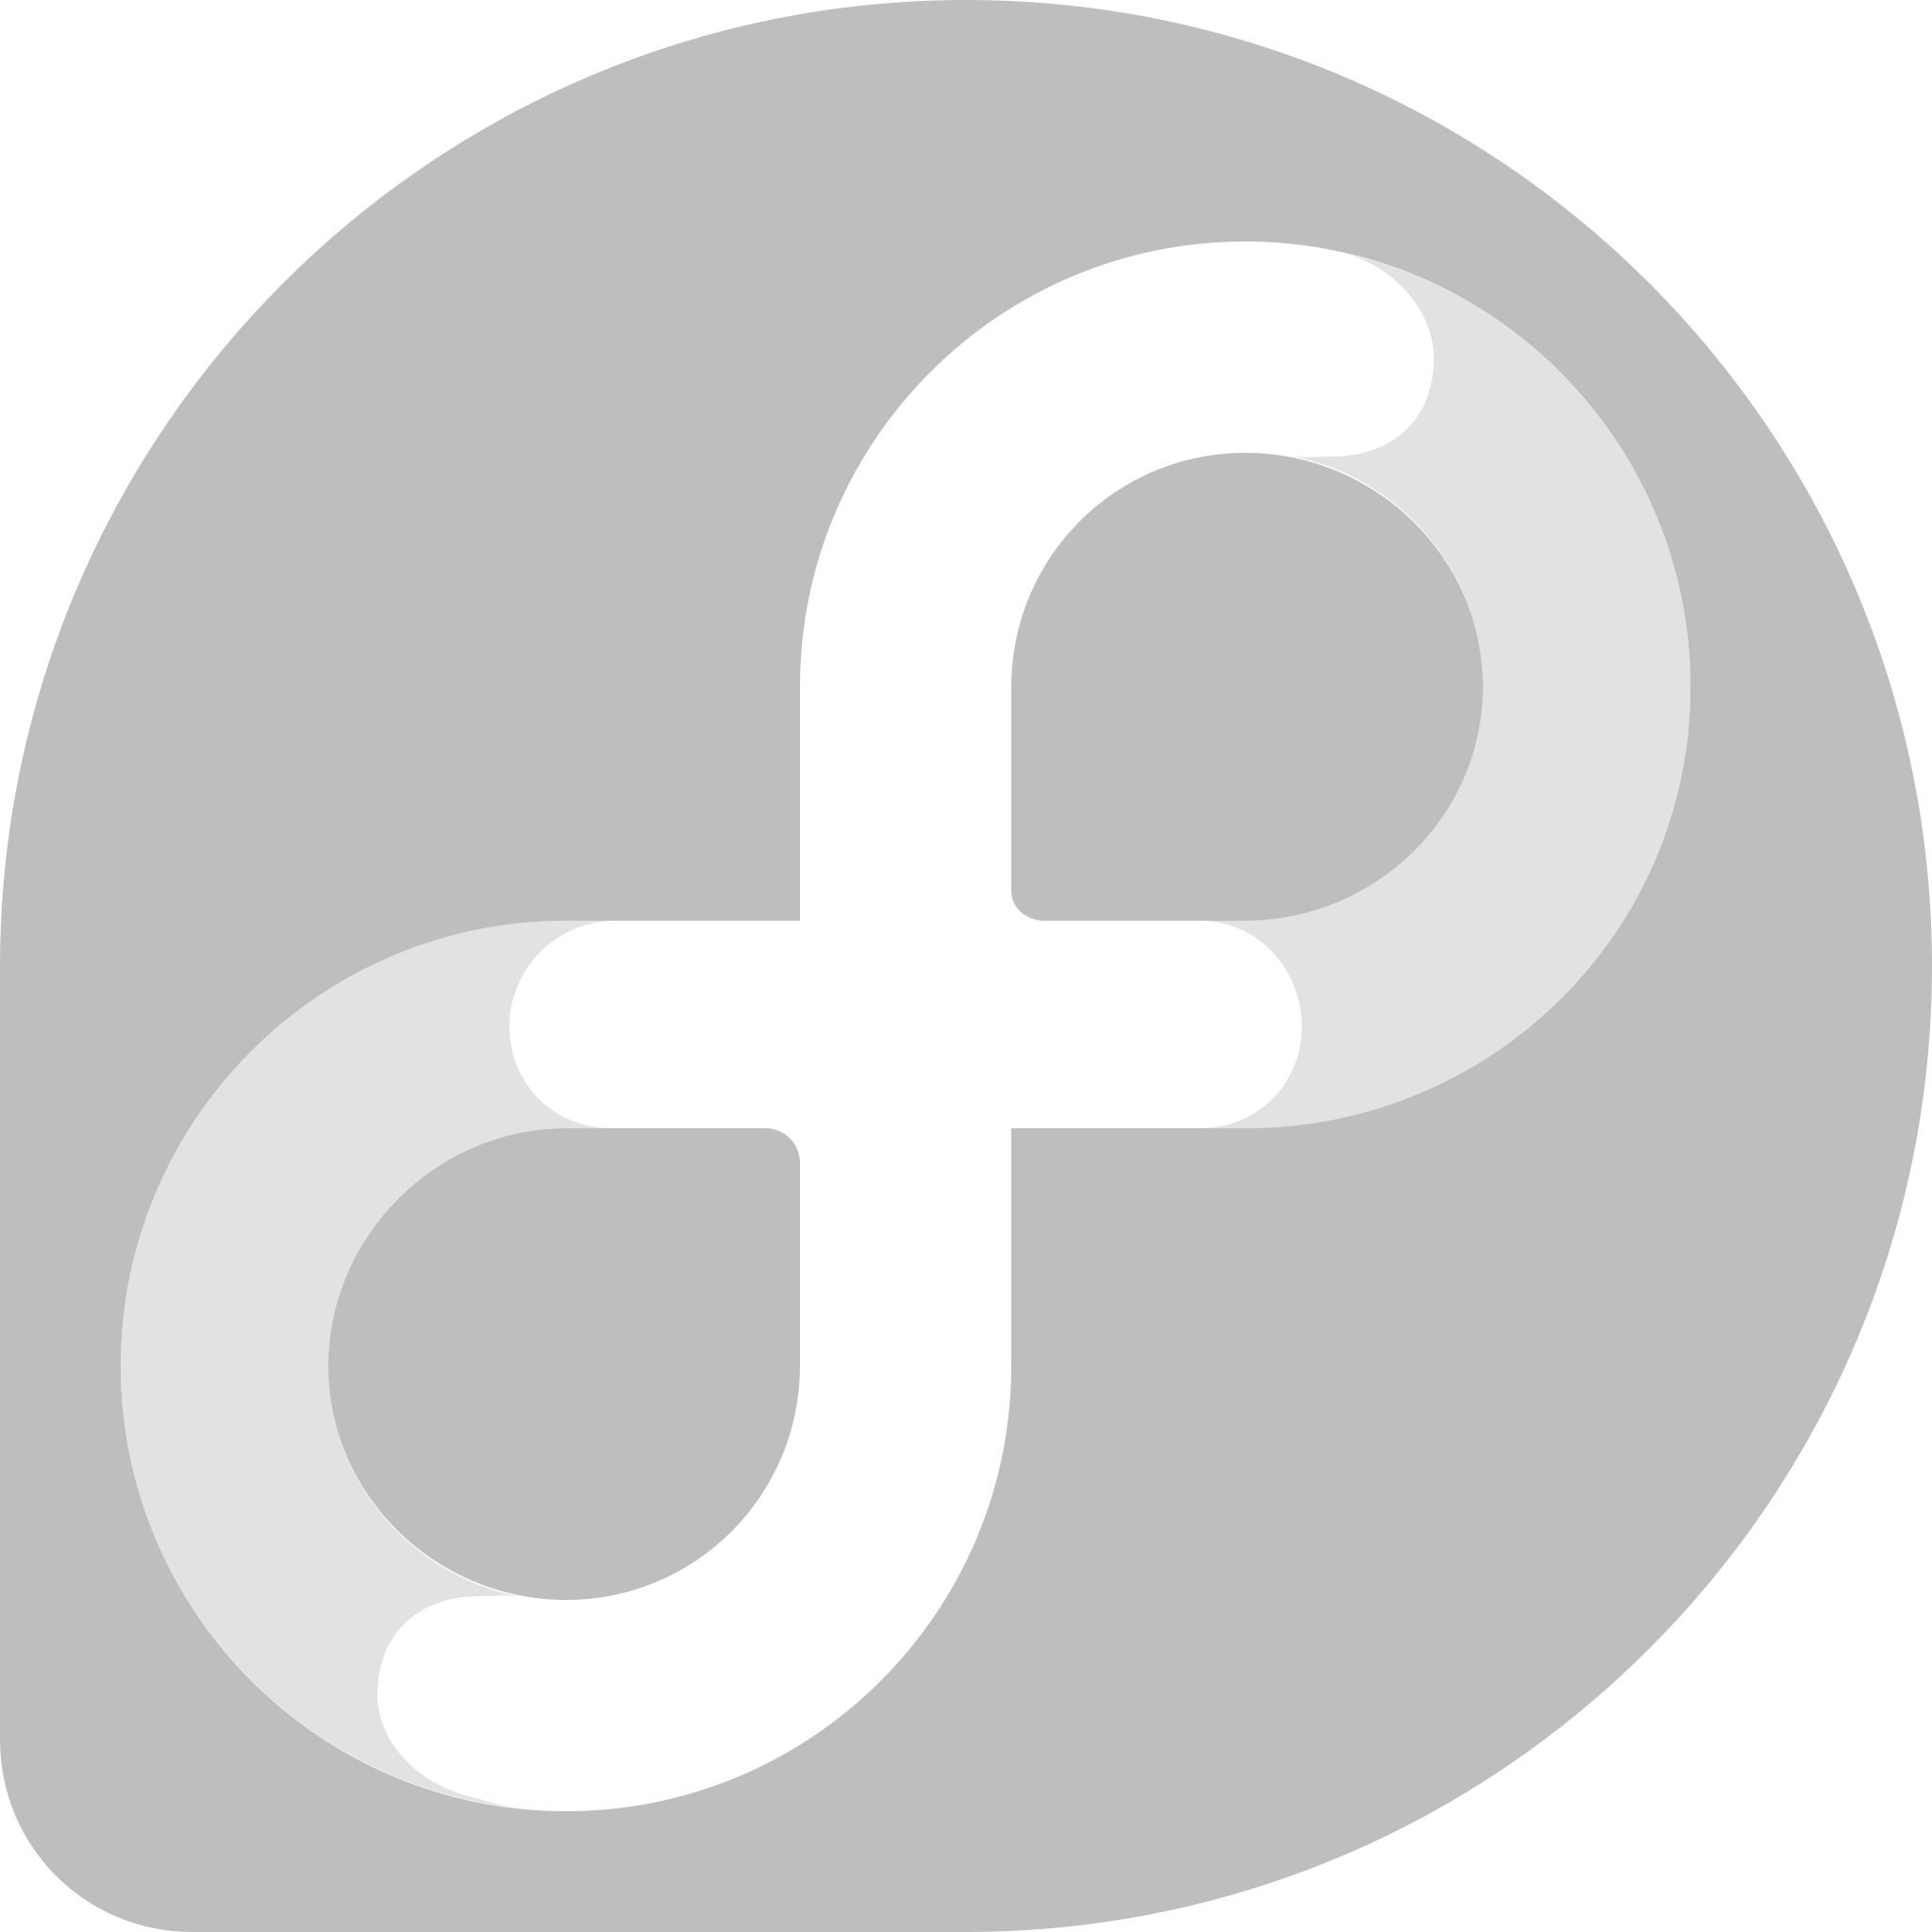 File:Faenza-avatar-default.svg - Wikipedia